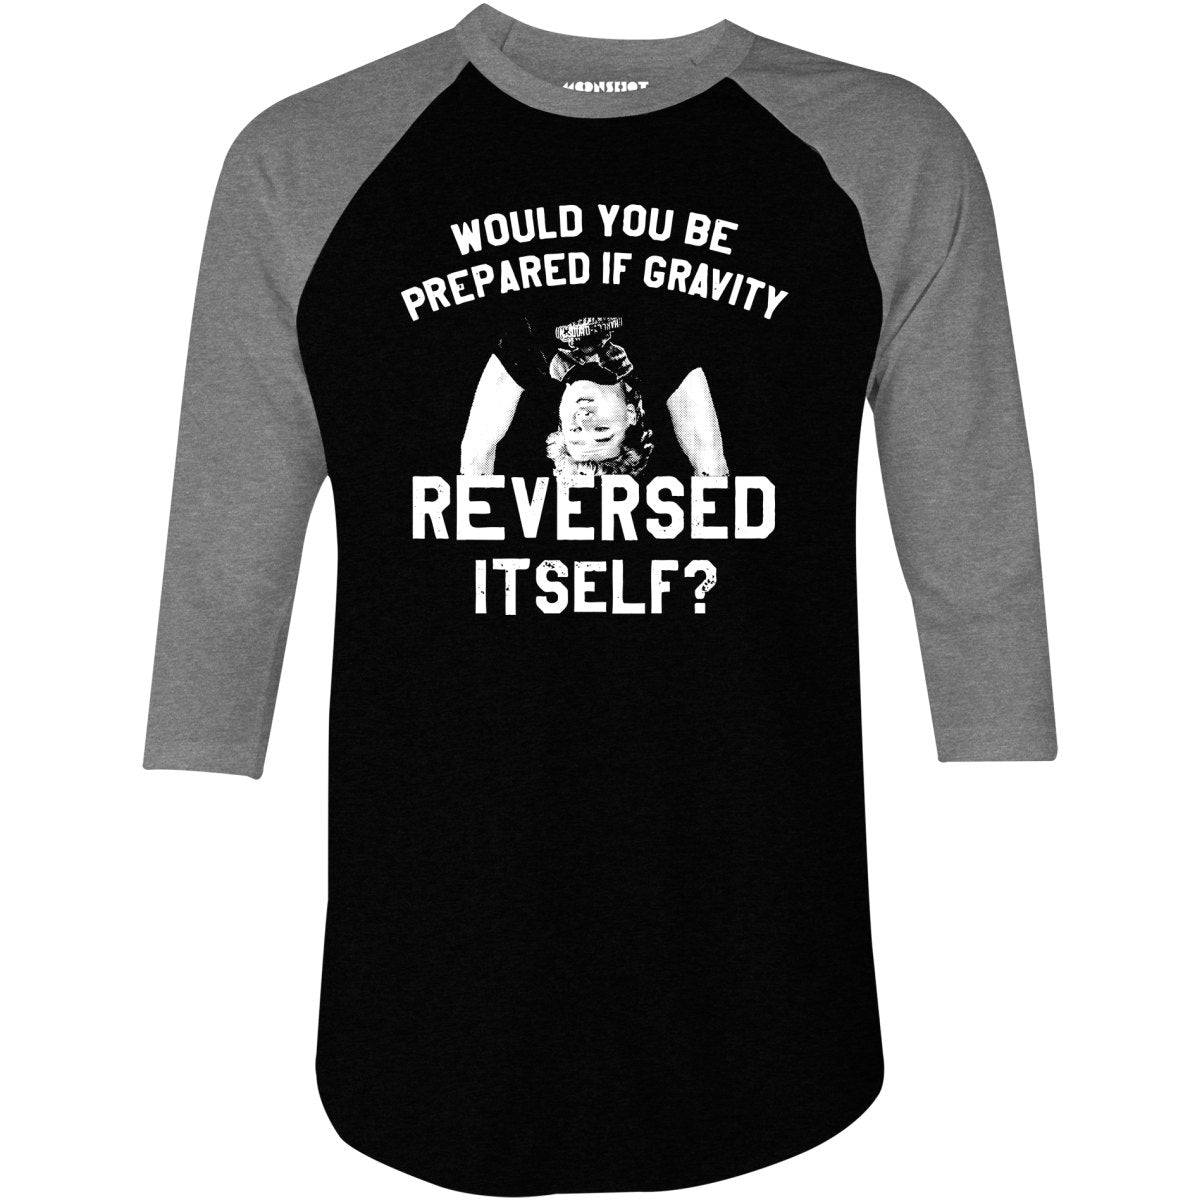 Real Genius - If Gravity Reversed Itself - 3/4 Sleeve Raglan T-Shirt